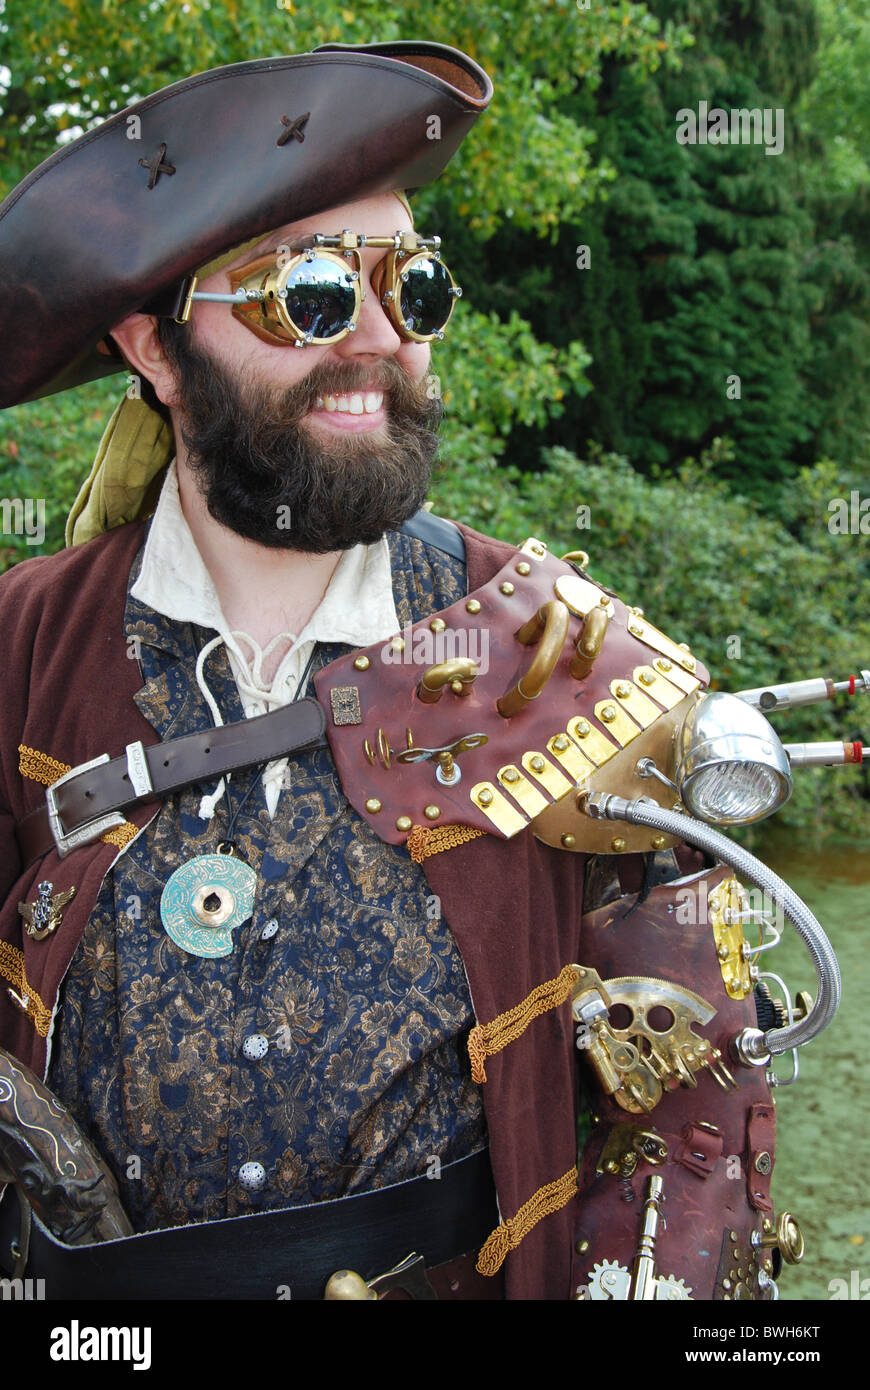 steampunk pirate at 2010 Fantasy Fair Arcen Netherlands Stock Photo